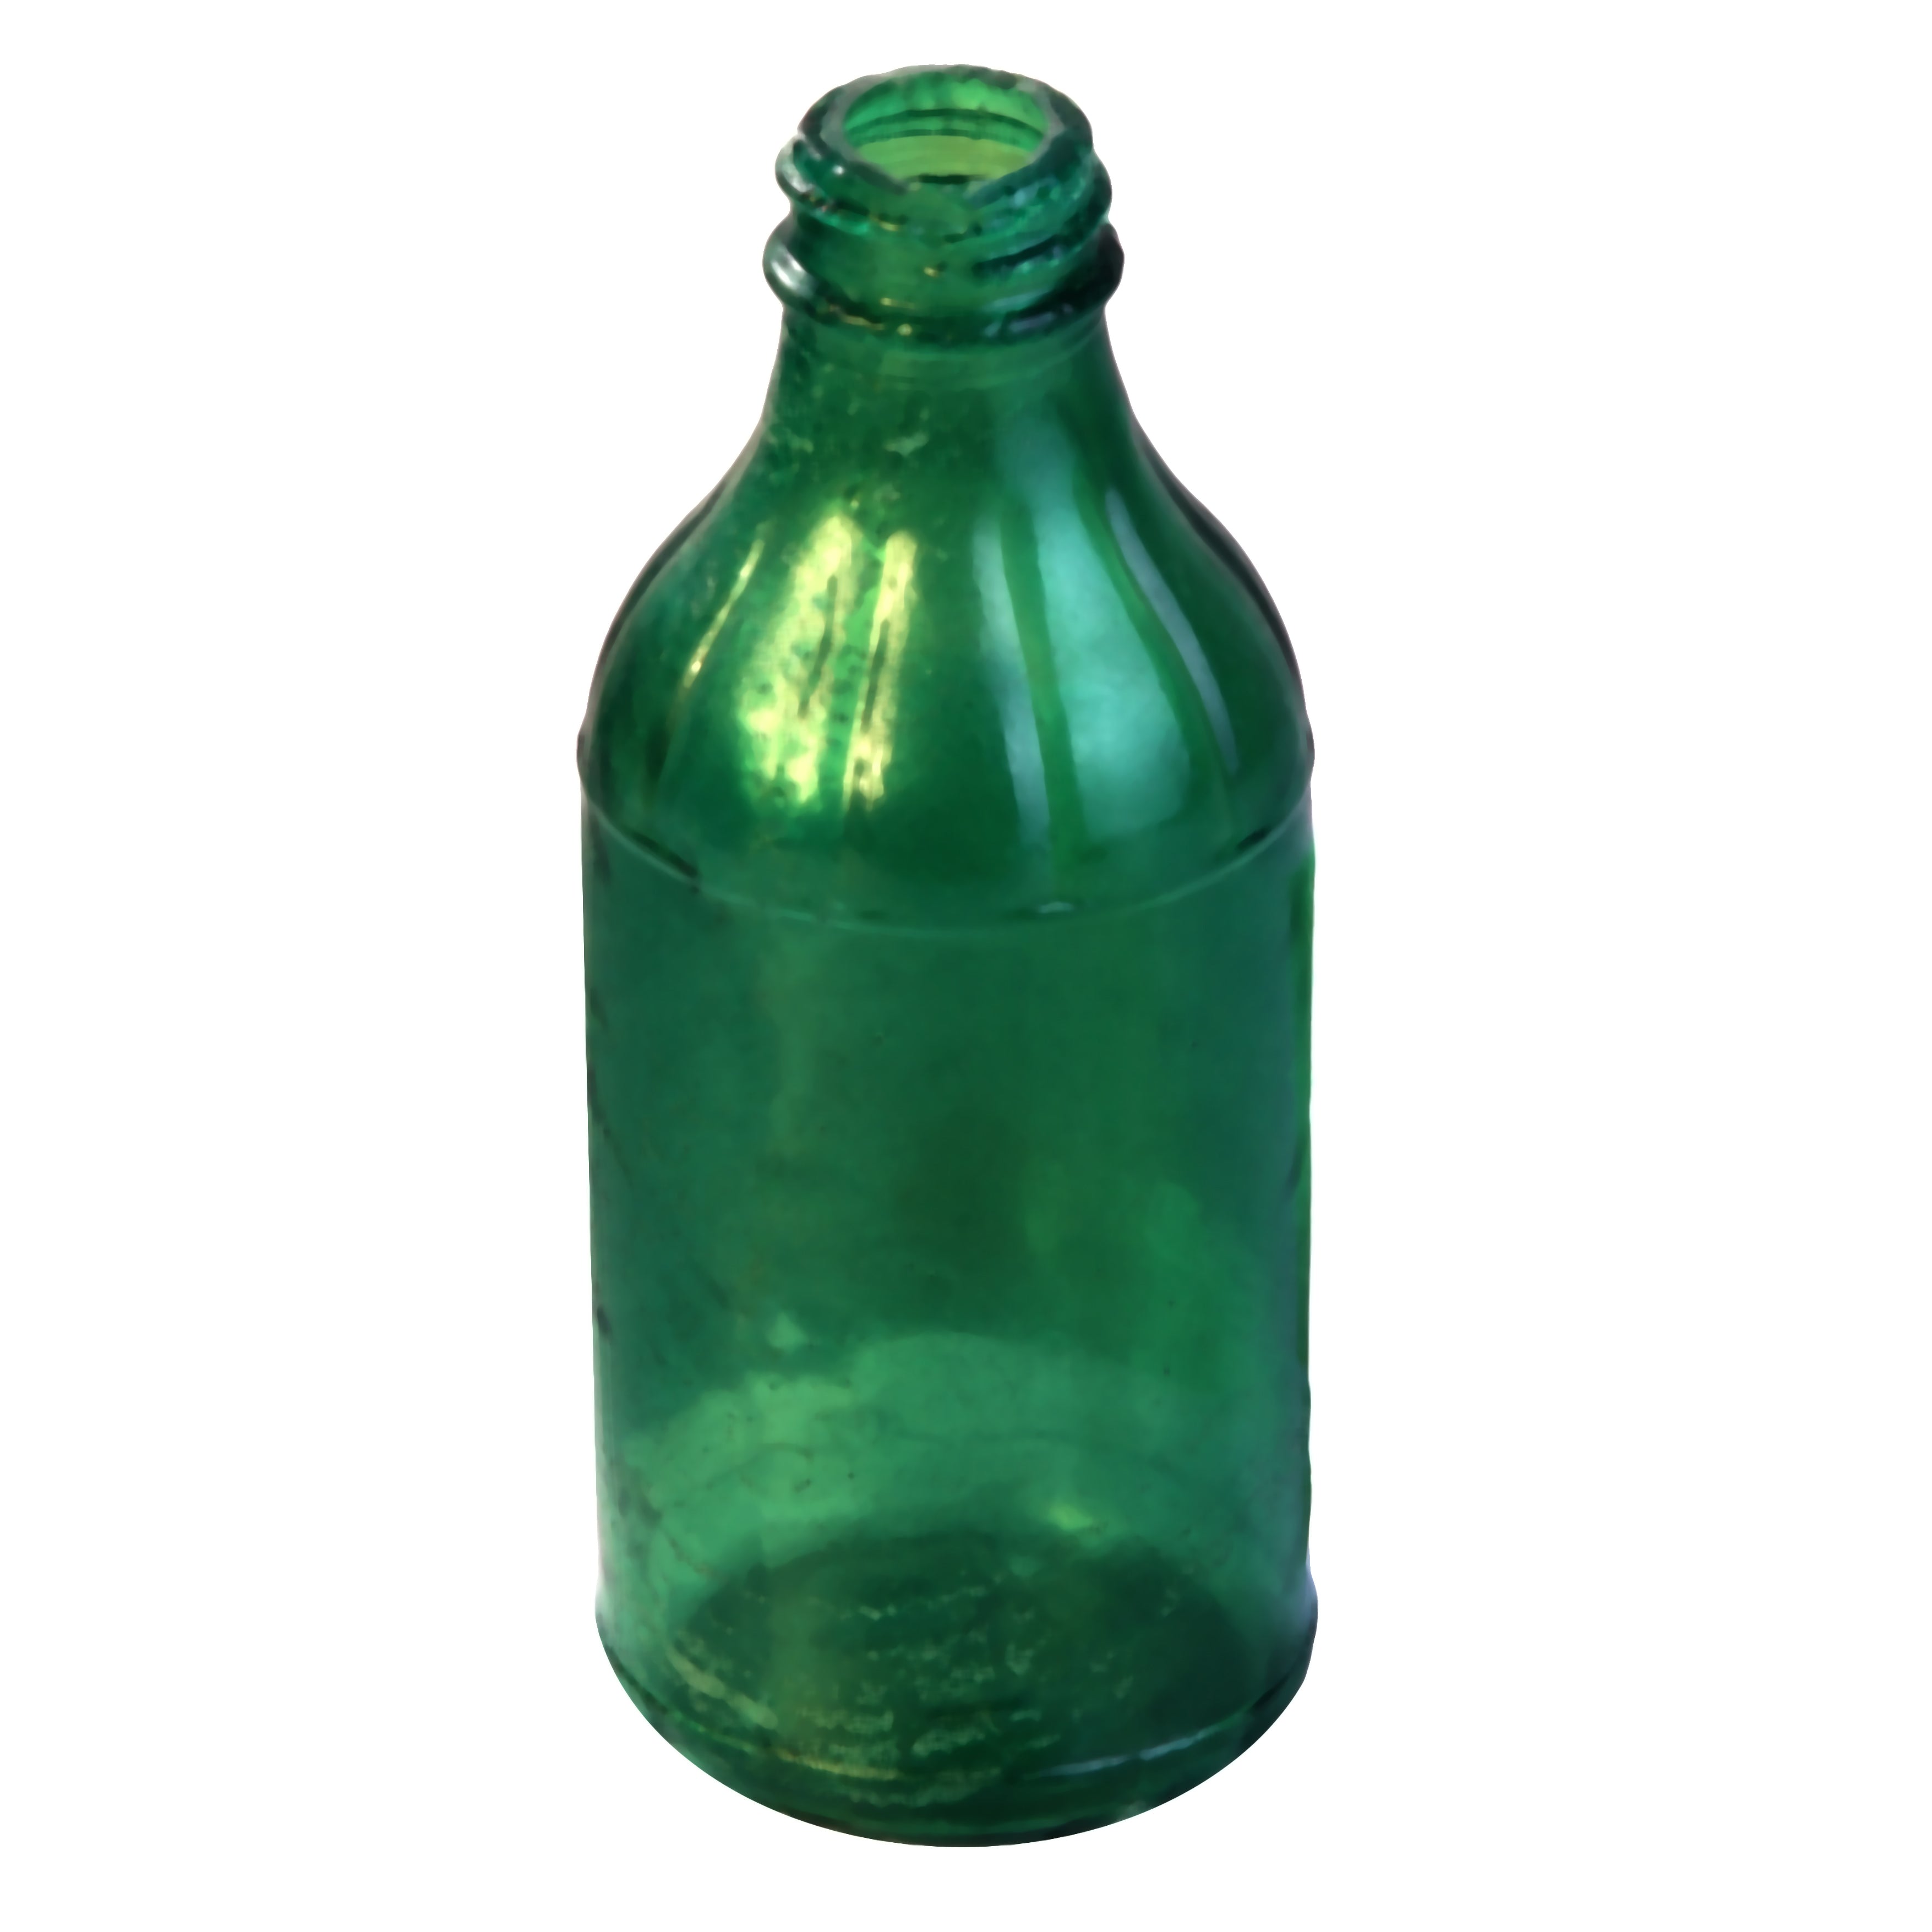 SMASHProps Breakaway Vintage Medicine Bottle Prop - DARK GREEN translucent - Dark Green Translucent